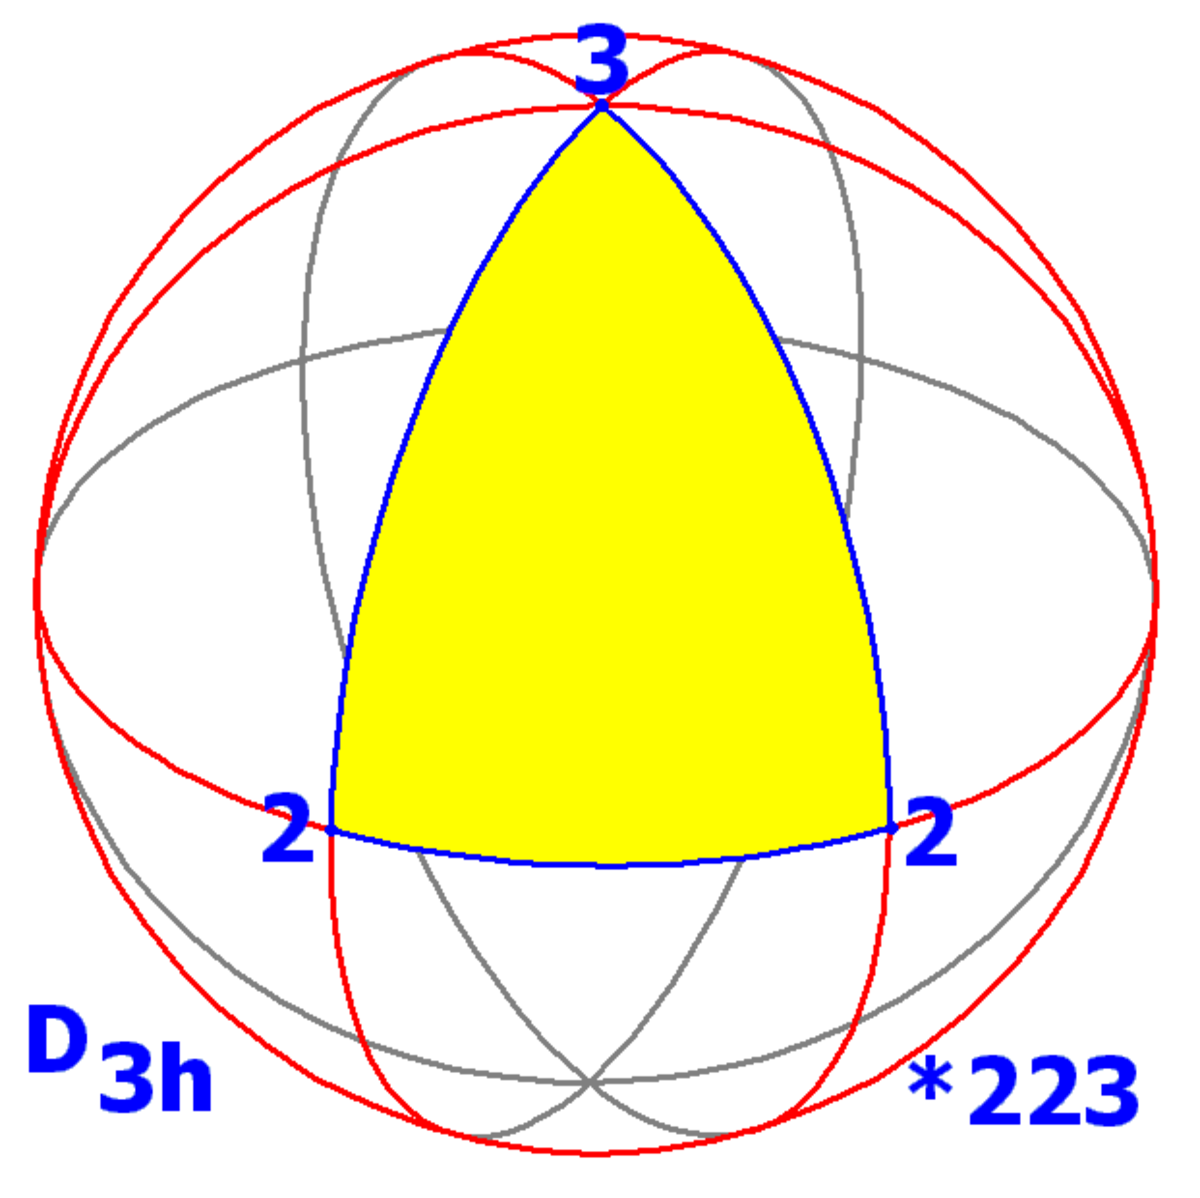 Sphere symmetry group d3h.png